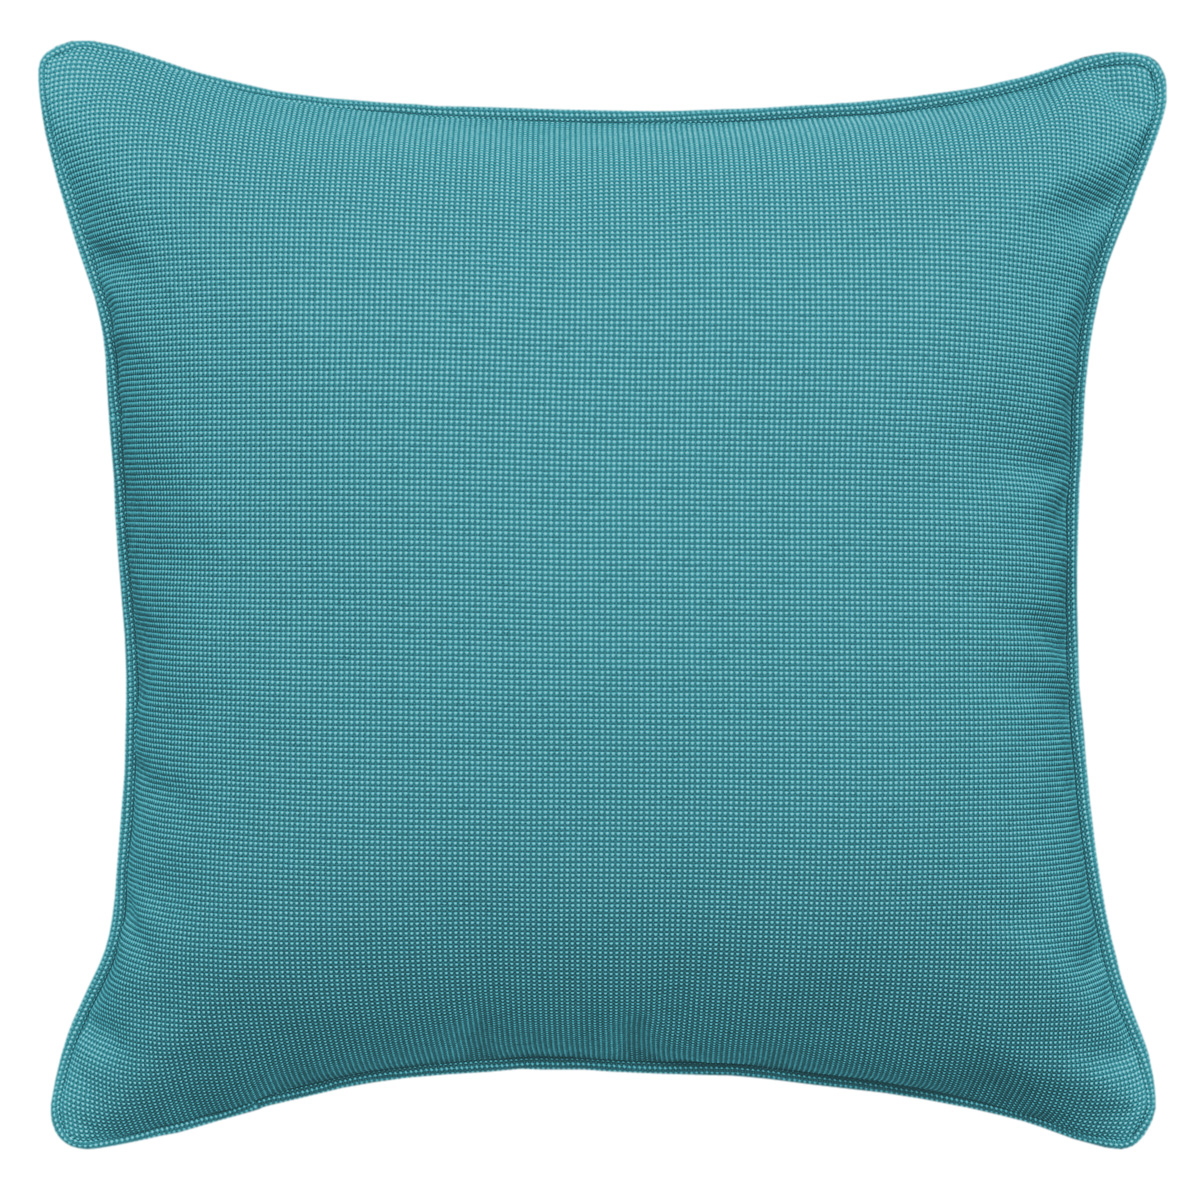 Noosa Turquoise Outdoor Cushion - 50x50cm